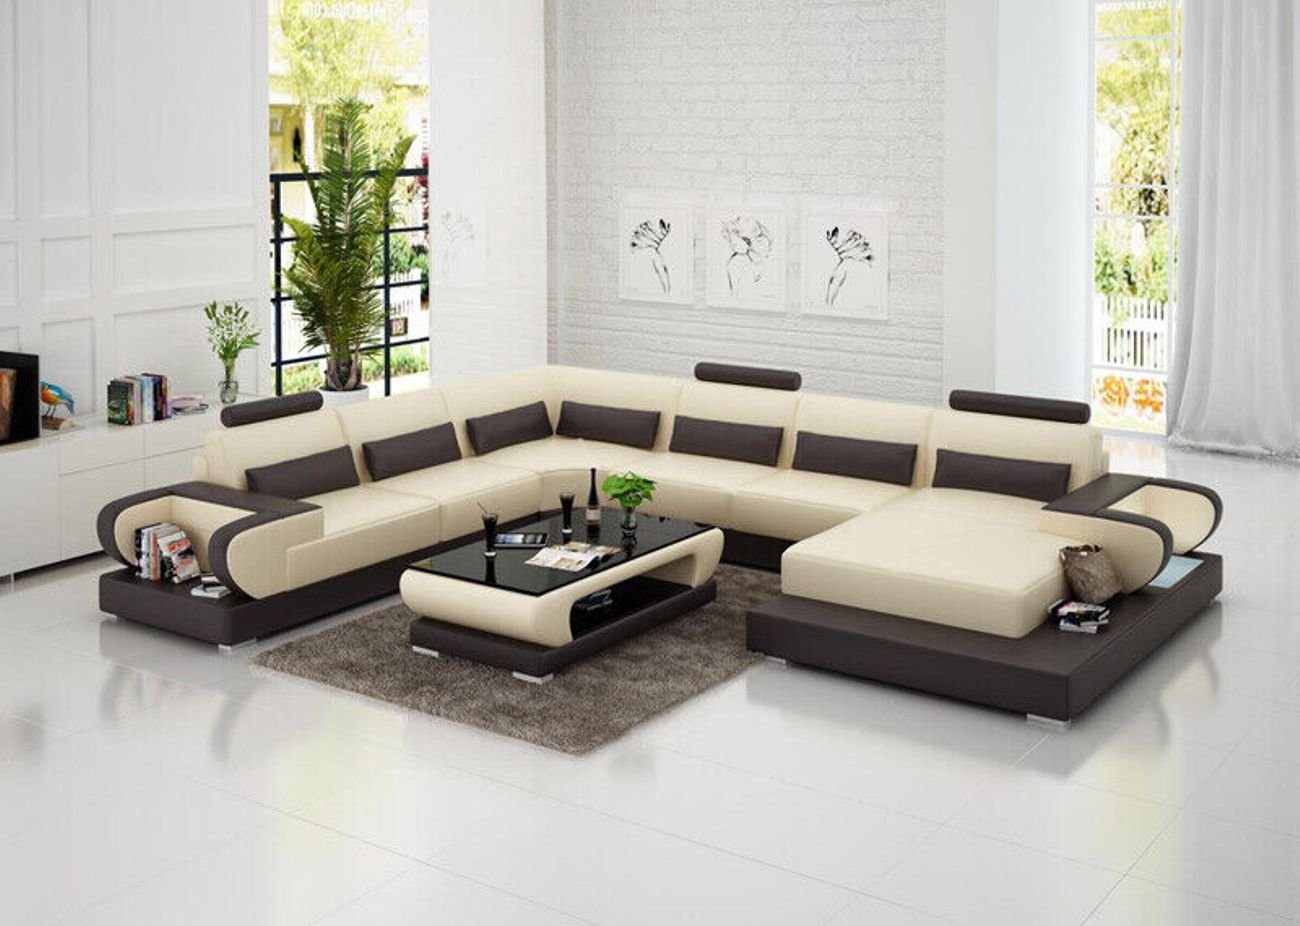 JVmoebel Ecksofa Ledersofa Couch Wohnlandschaft Ecksofa Eck Garnitur Design Modern Sofa Beige